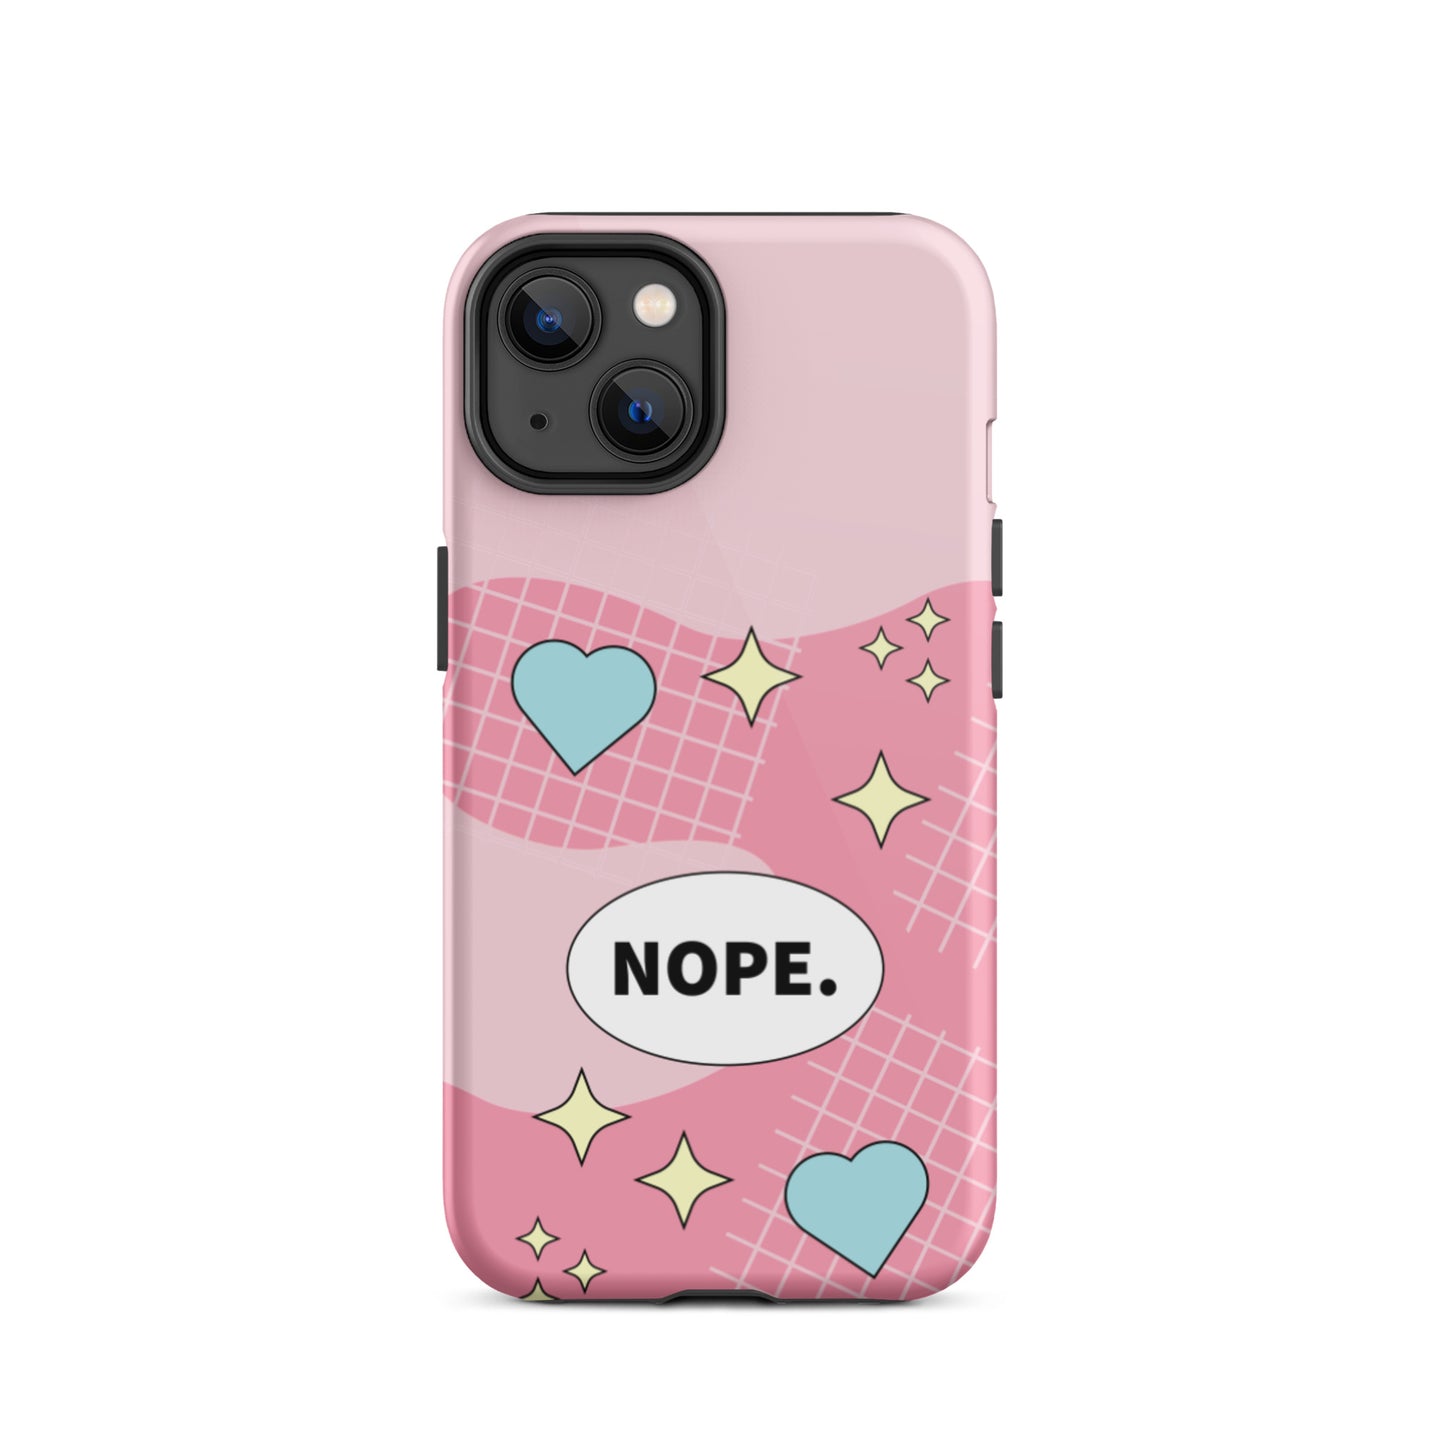 NOPE - Tough iPhone case